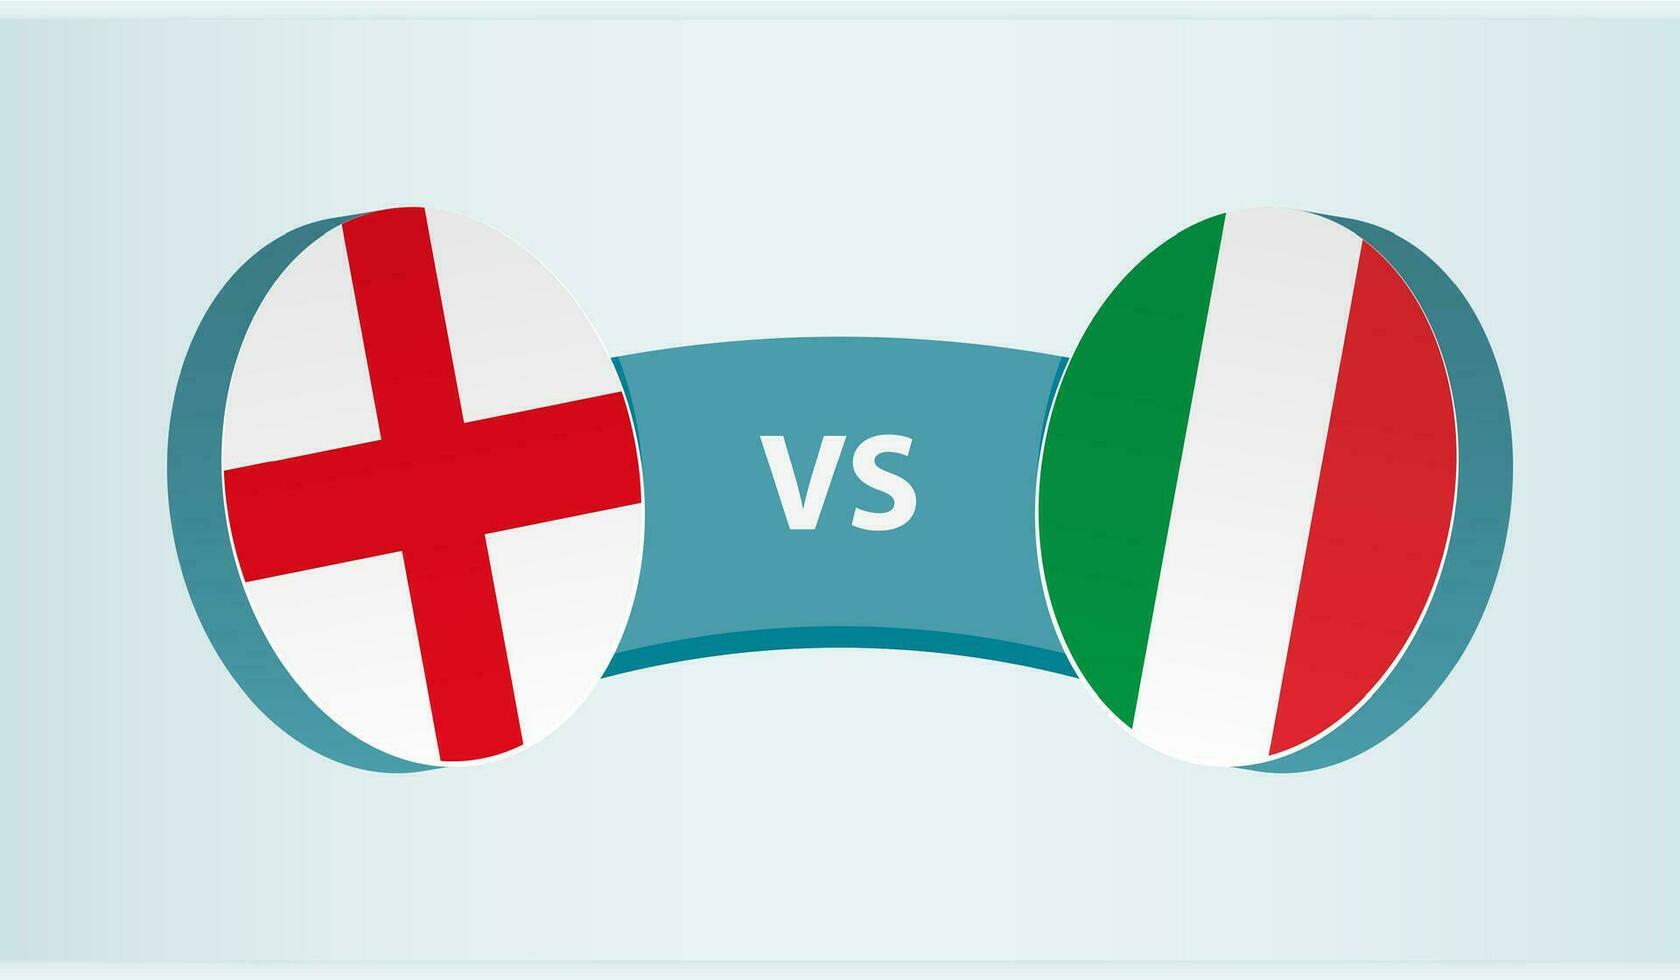 Inglaterra versus Itália, equipe Esportes concorrência conceito. vetor